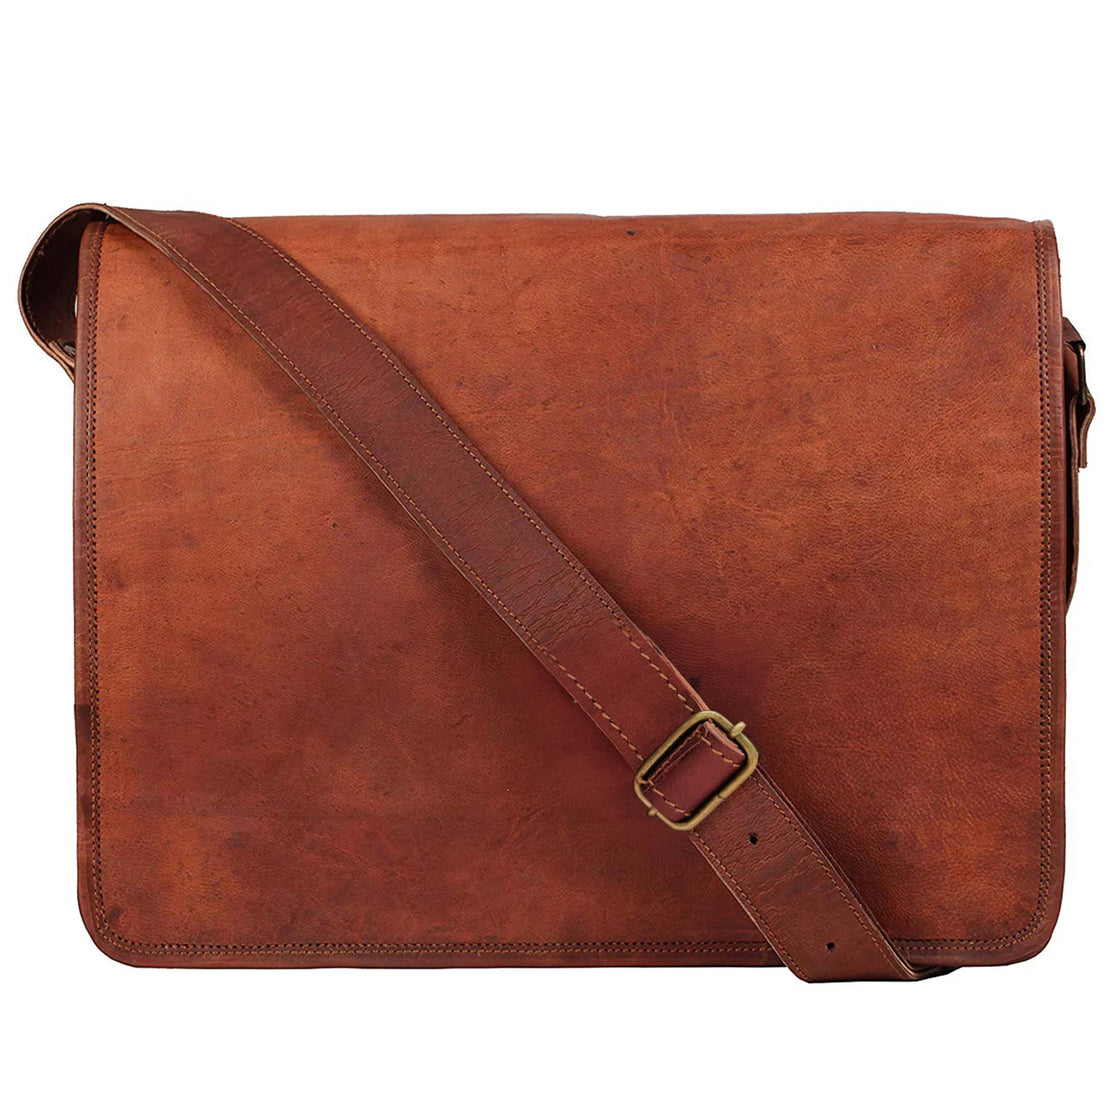 11 inch Leather Messenger Bag in Burgundy